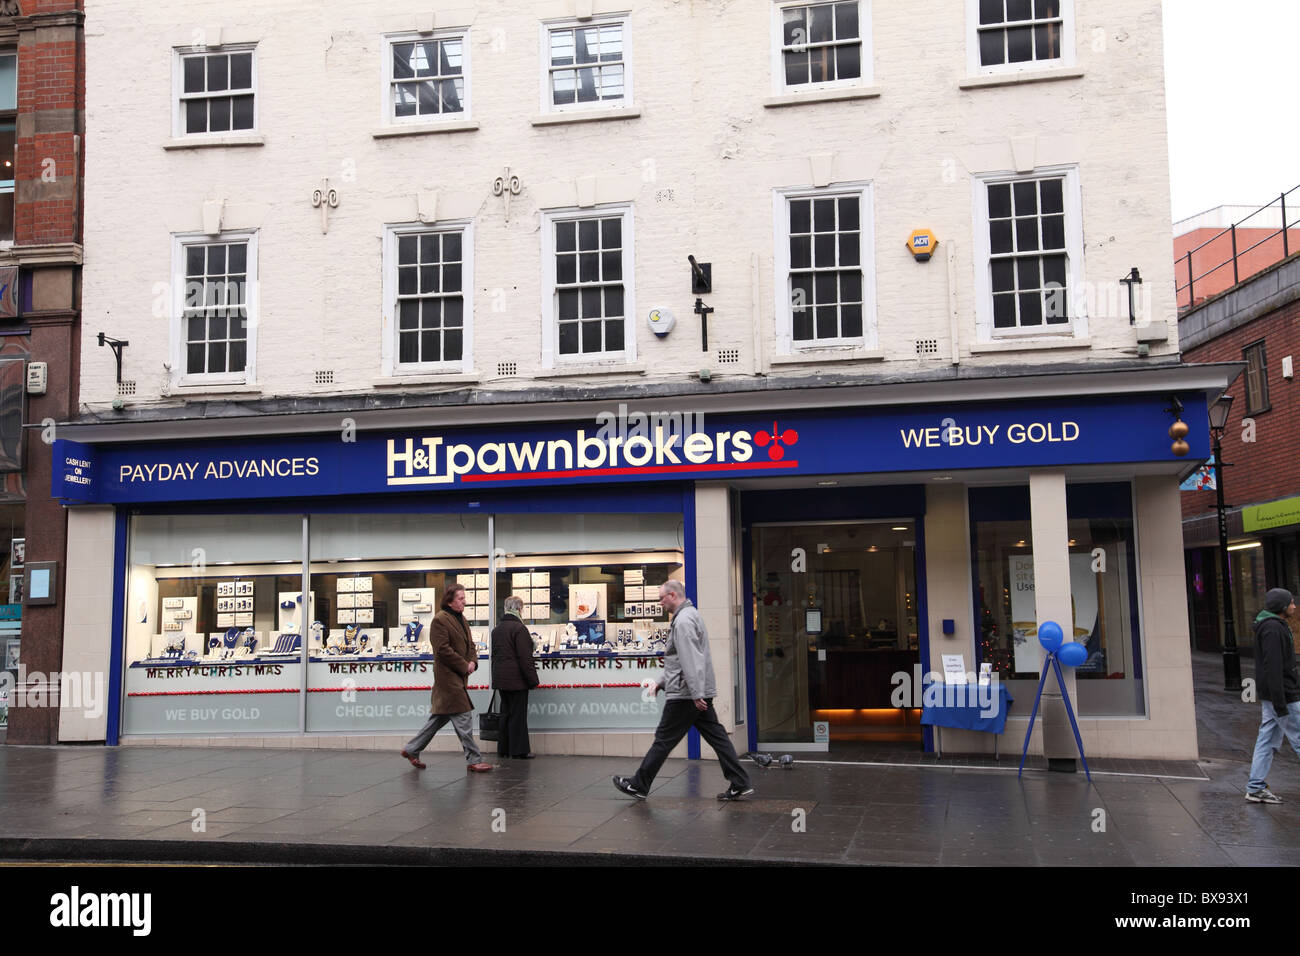 H&T Pawnbrokers in Nottingham, England, U.K. Stock Photo